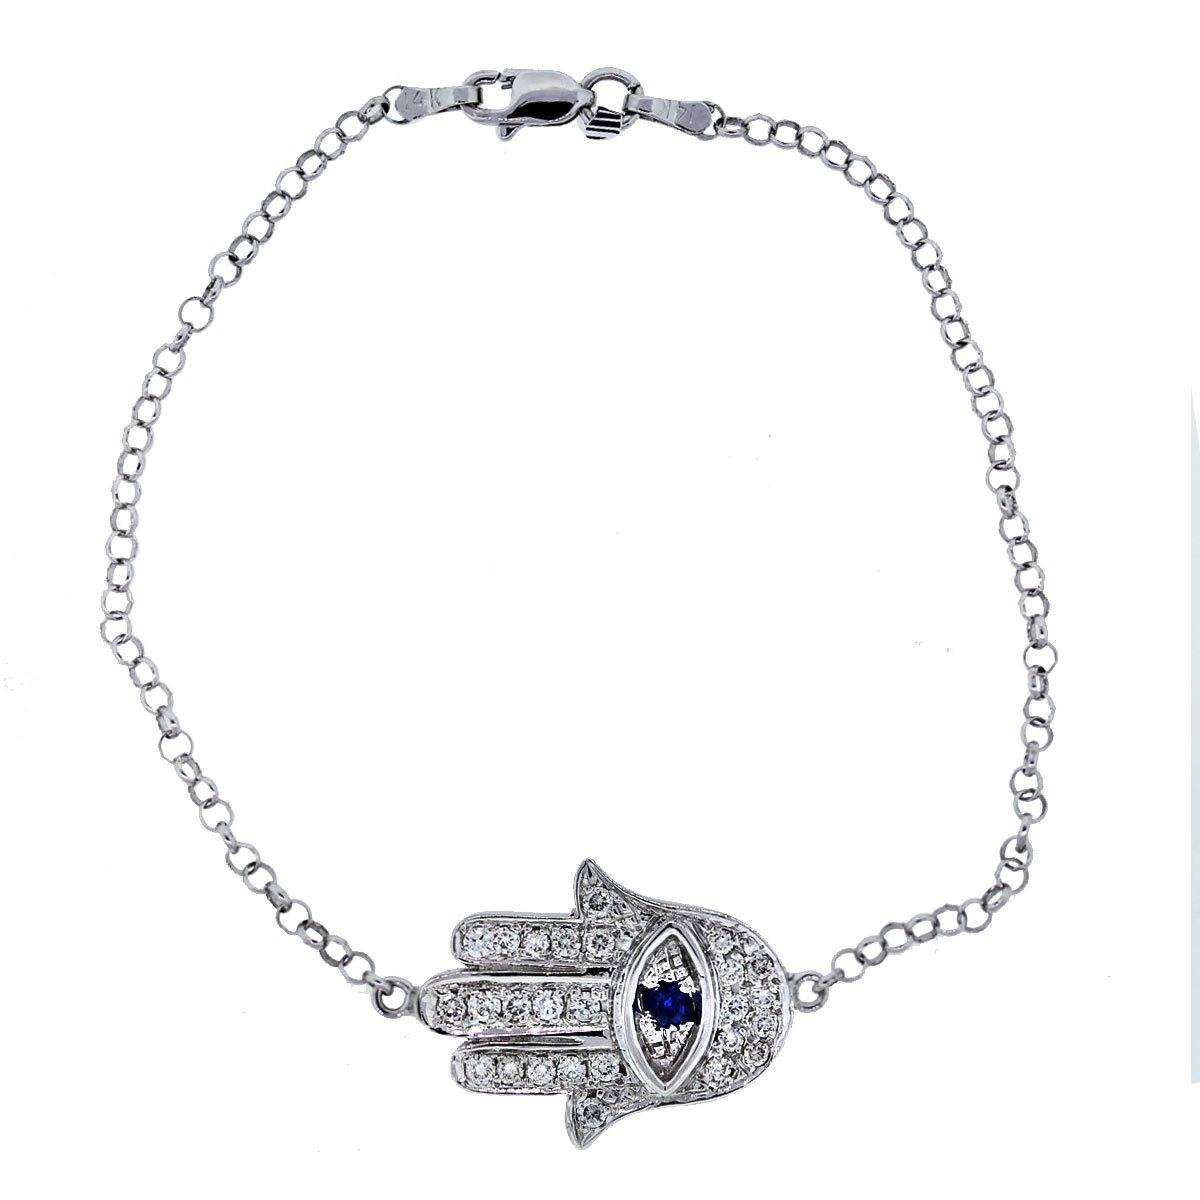 Hamsa bracelet with diamonds and sapphires